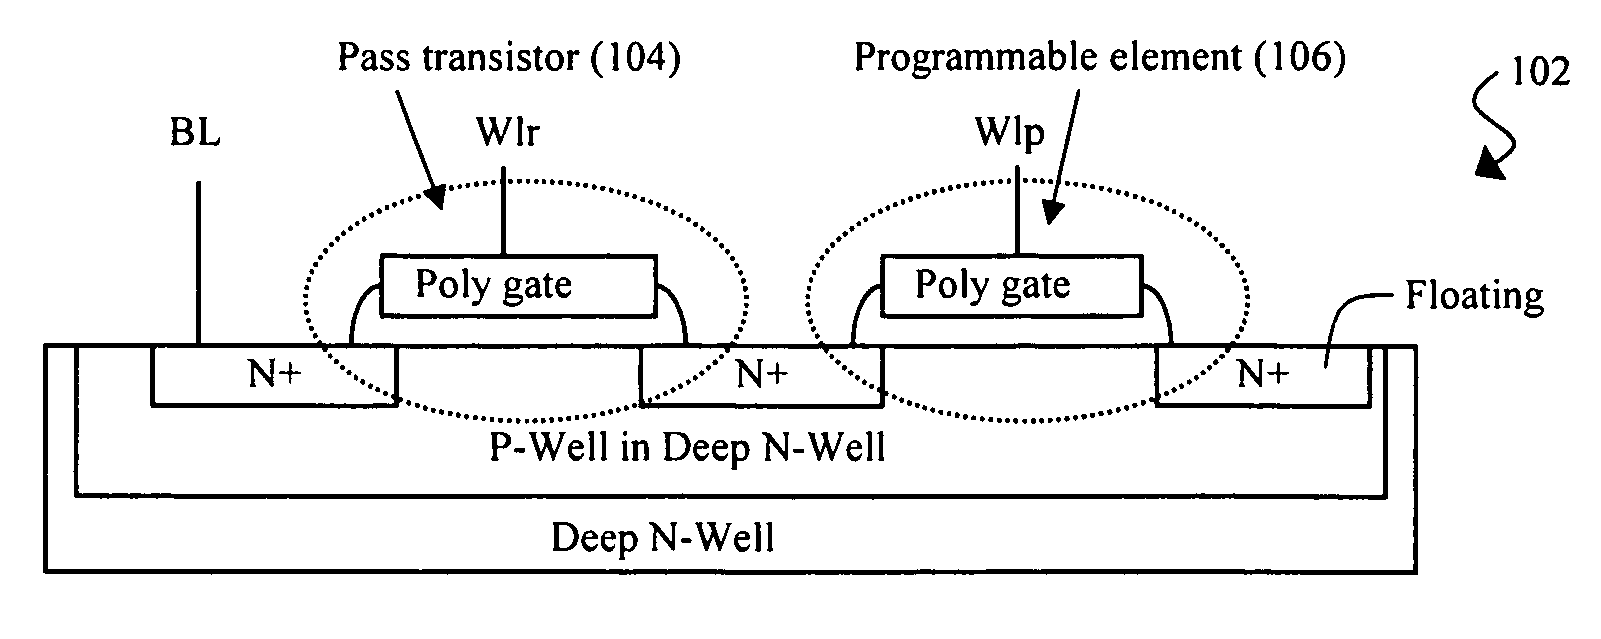 Non-volatile semiconductor memory based on enhanced gate oxide breakdown